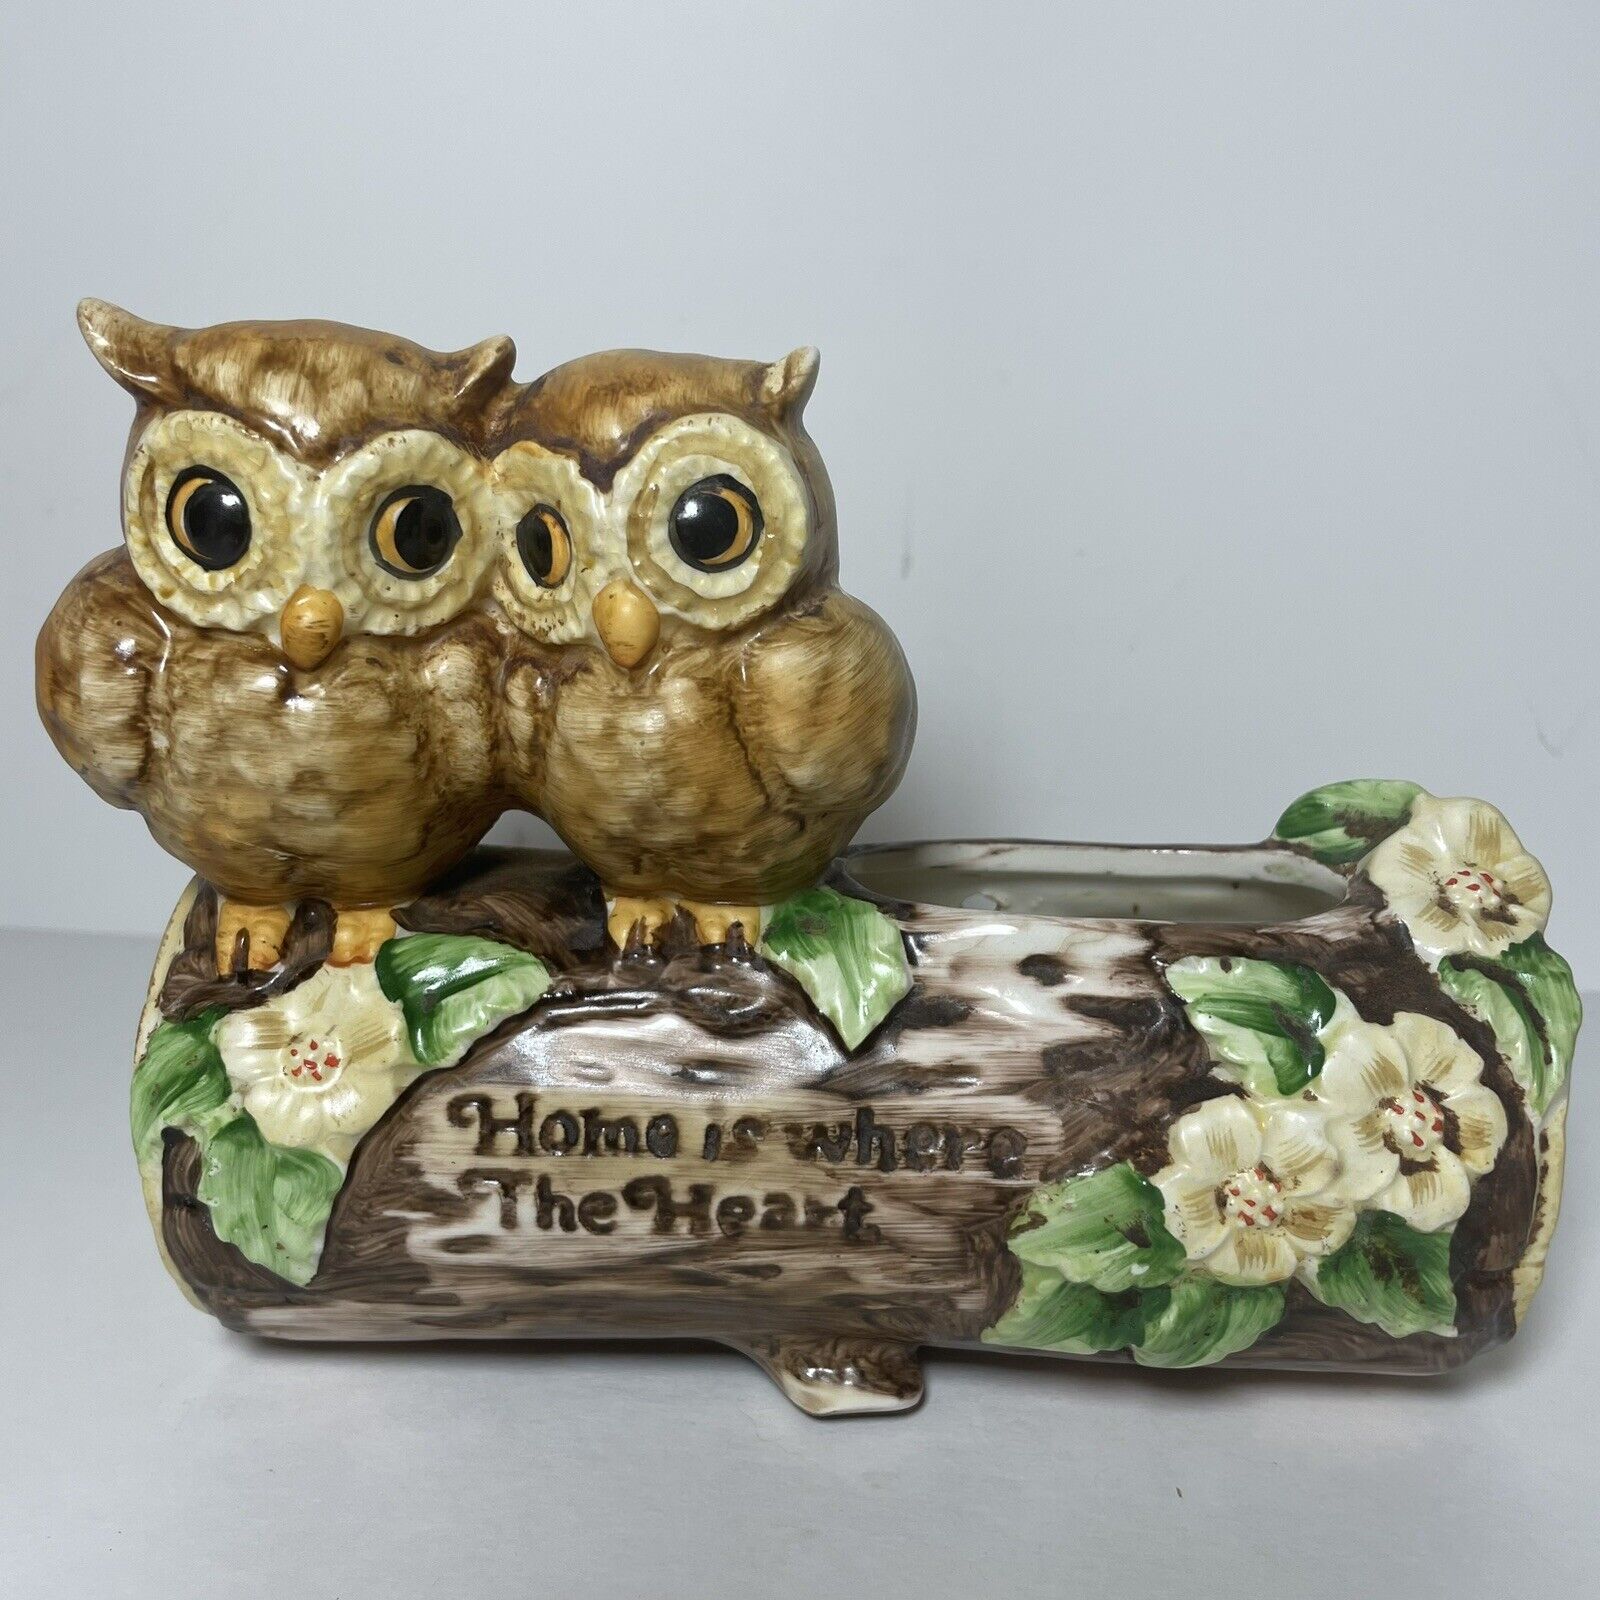 Vintage Josef Originals Planter Owl On Log Home Is Where The Heart 7” L x 5” T